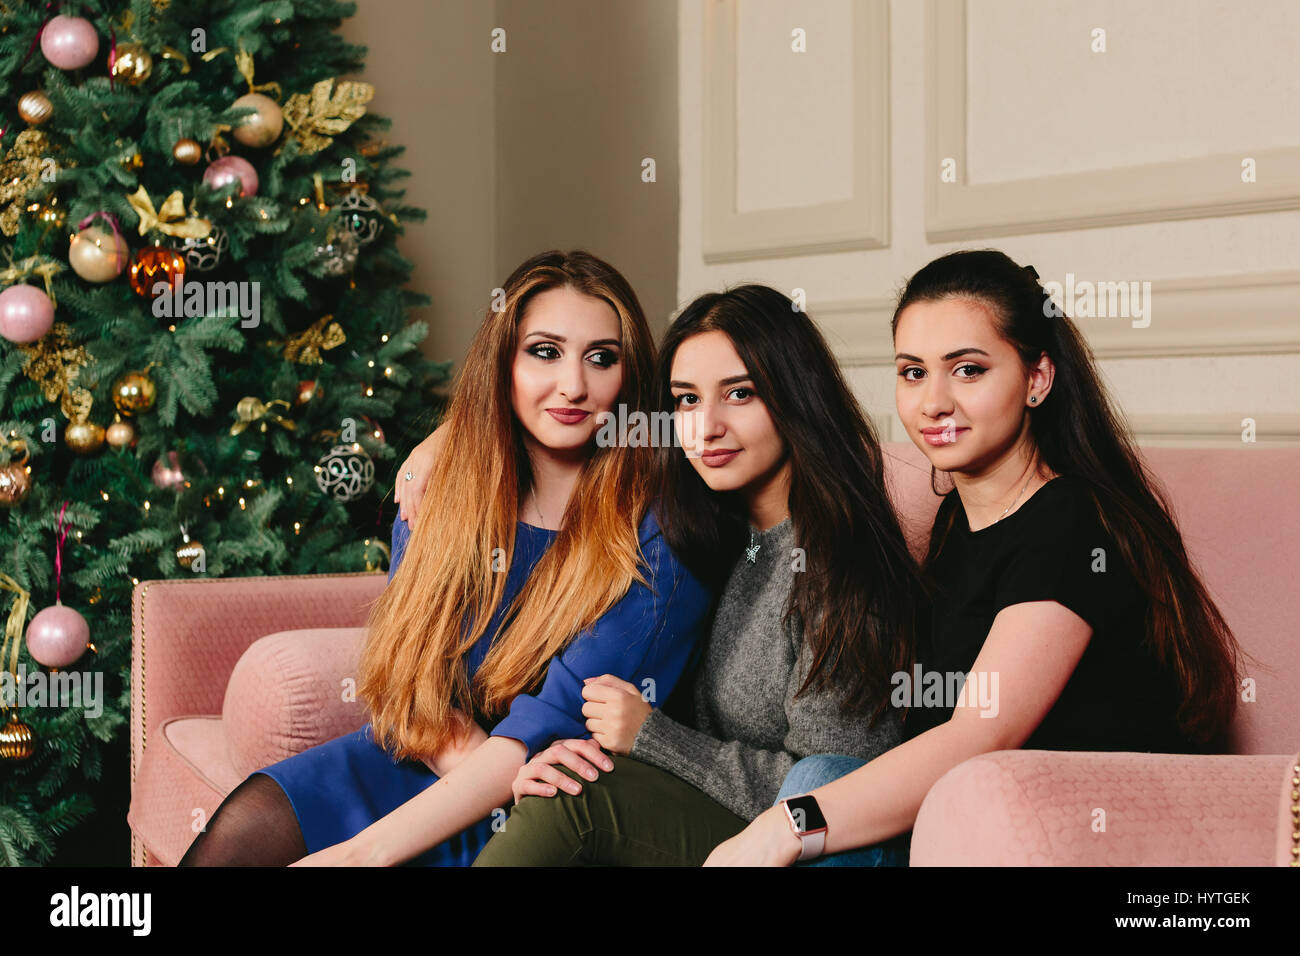 Three beautiful young girlfriends on a sofa near the Christmas tree. Studio horizontal portrait. Stock Photo